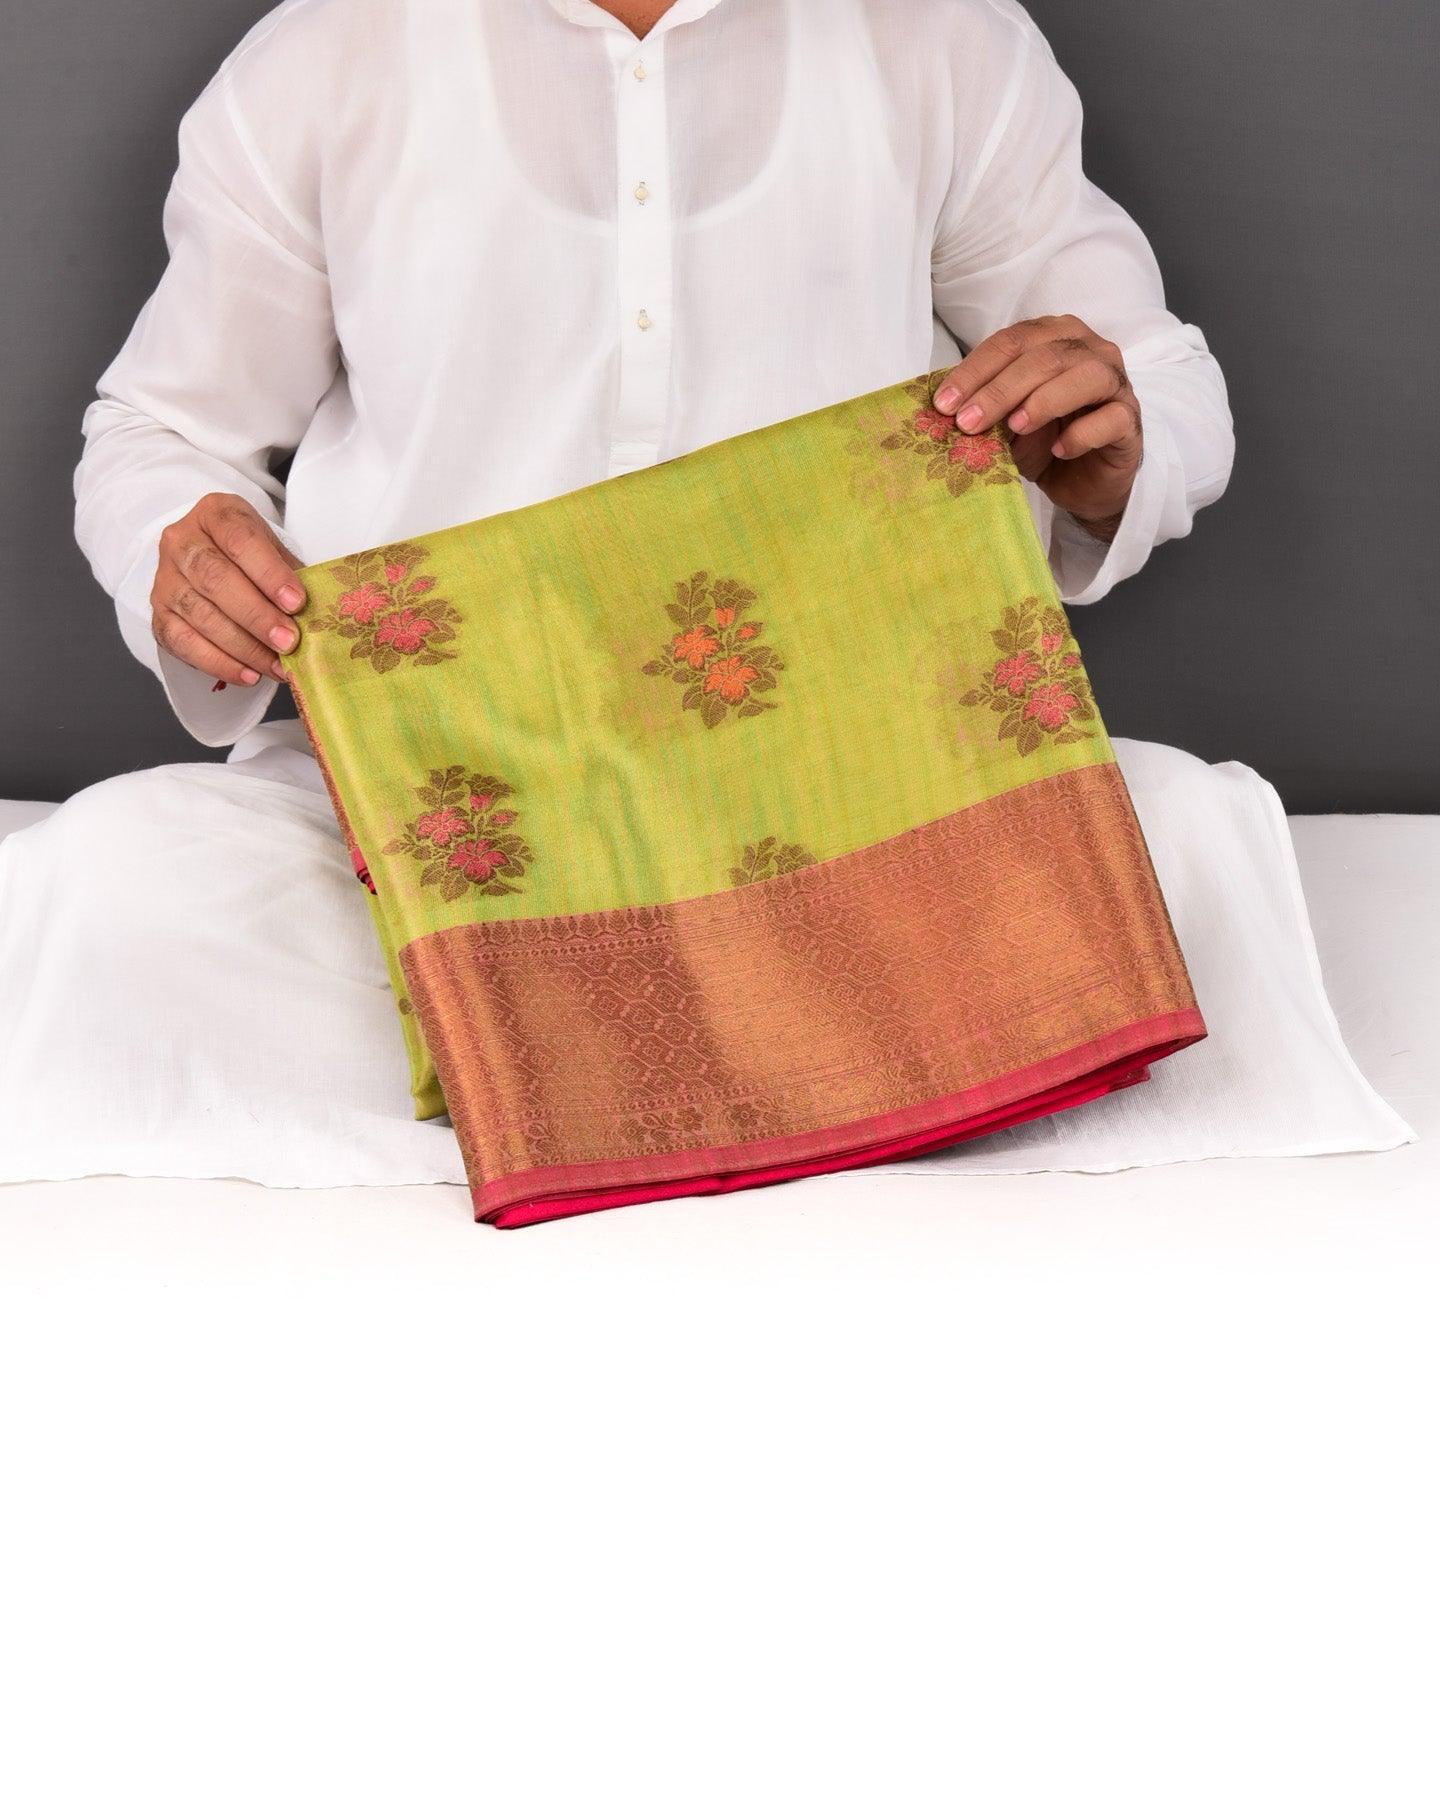 Metallic Green Banarasi Antique Zari & Resham Meena Buta Cutwork Brocade Woven Cotton Tissue Saree - By HolyWeaves, Benares